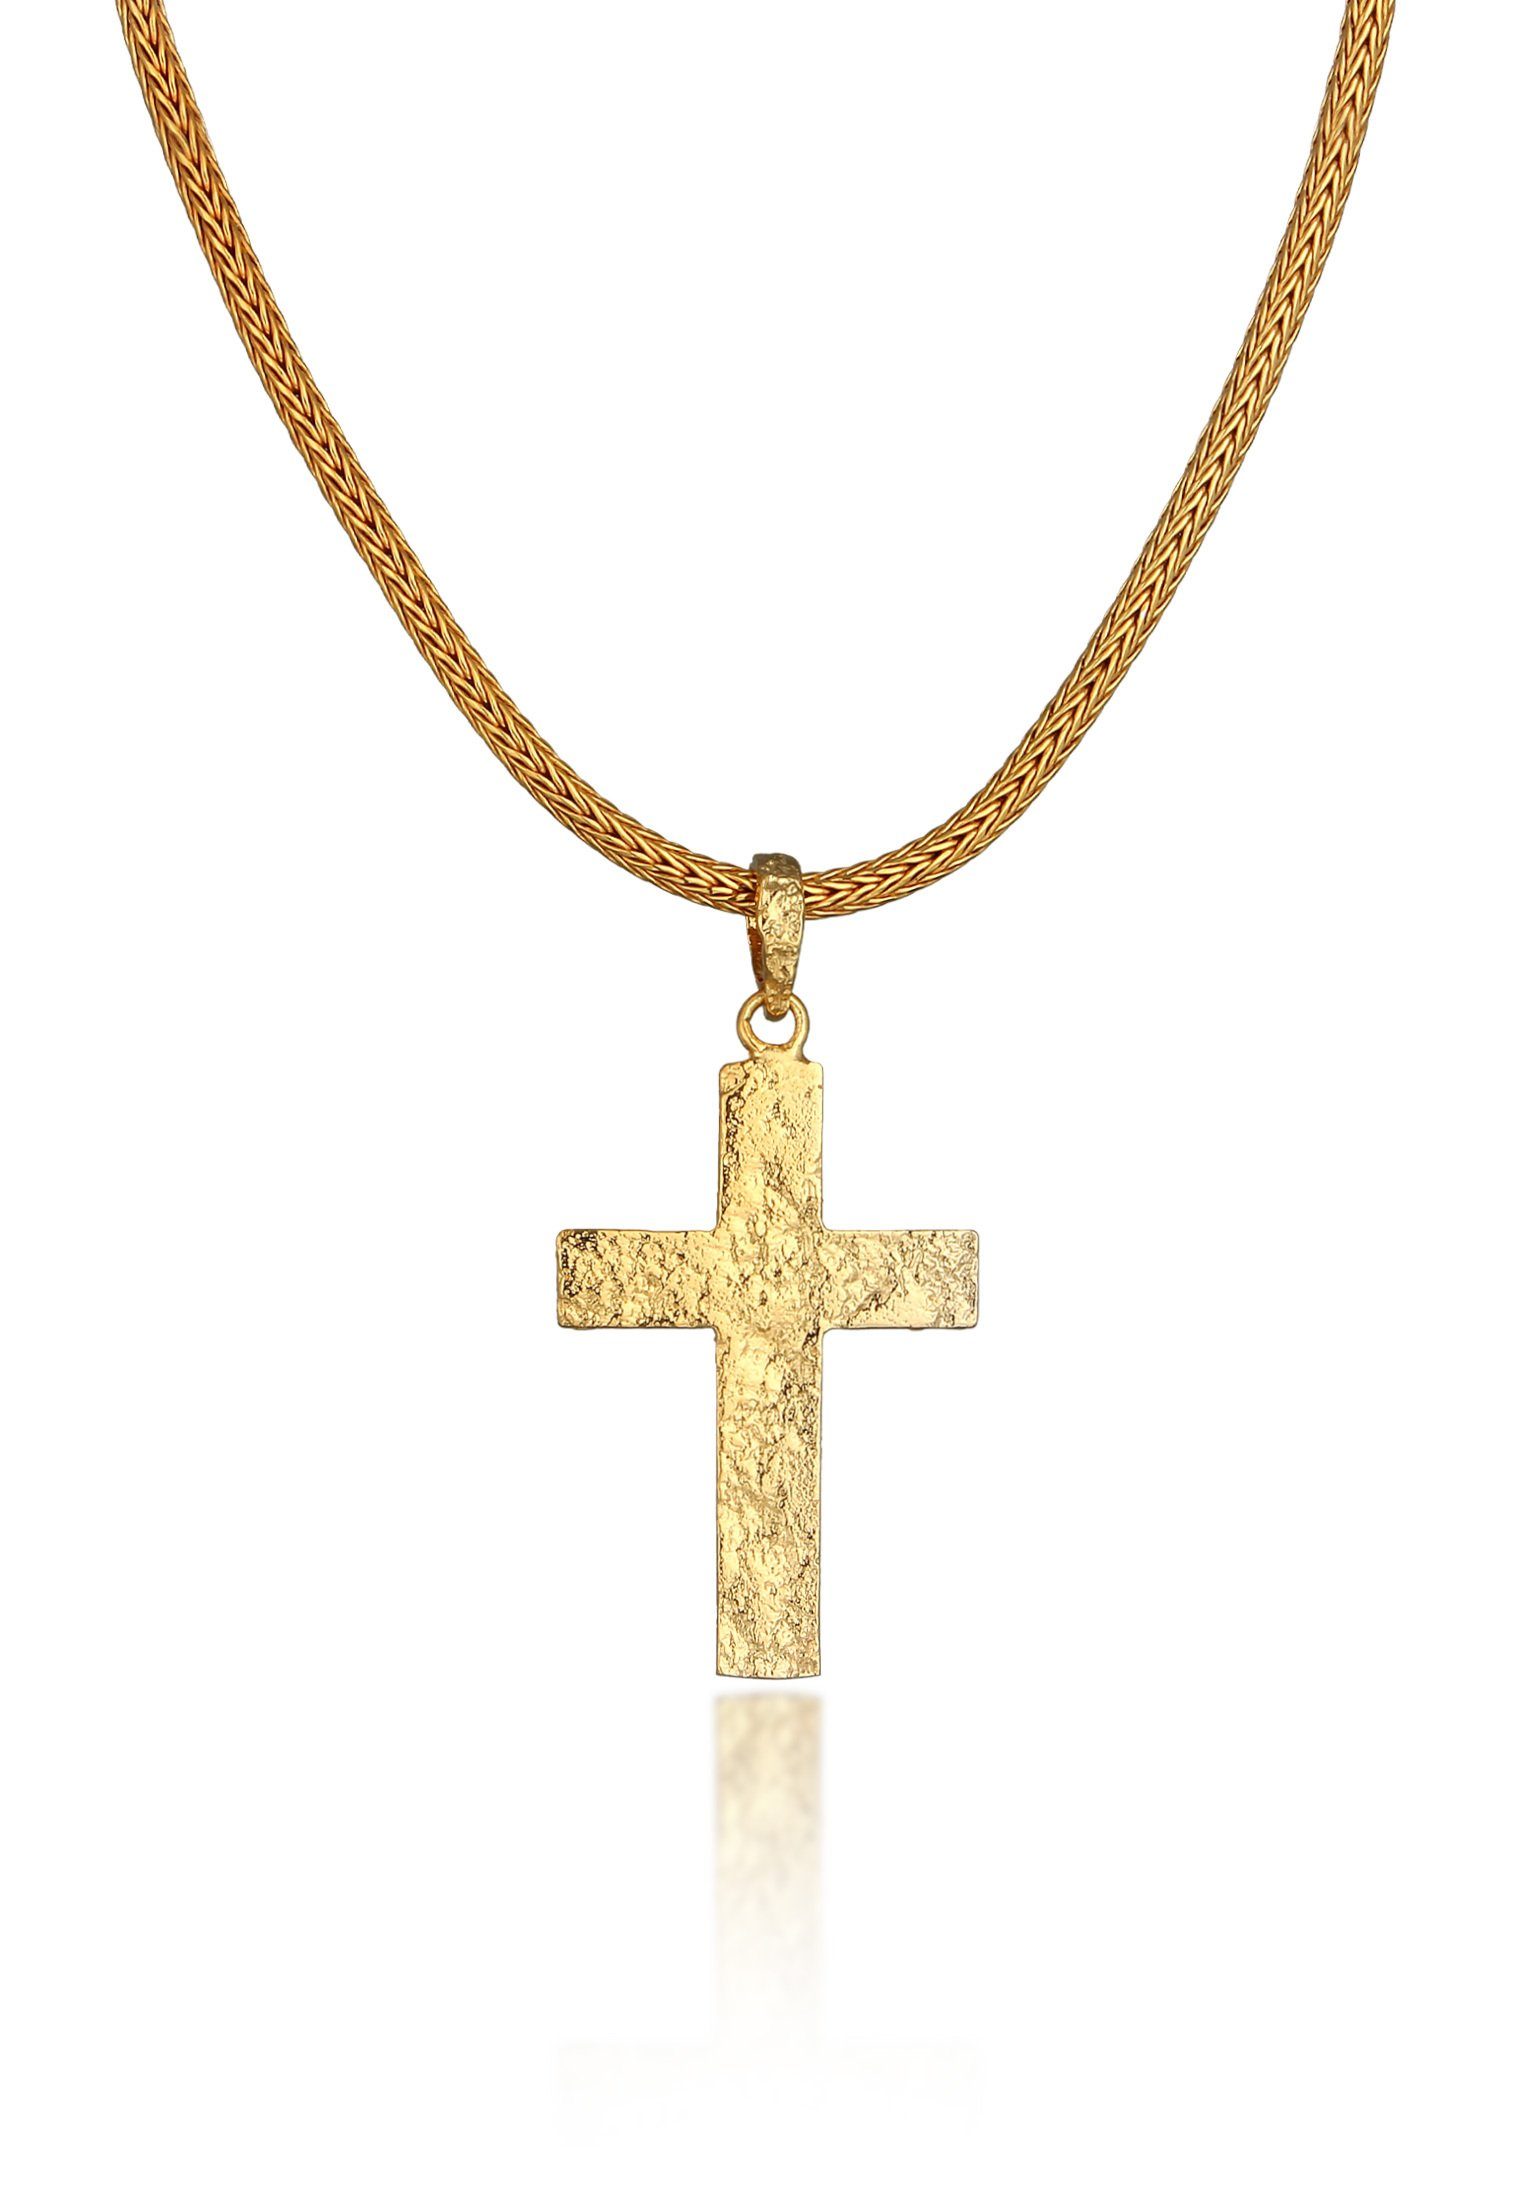 Kuzzoi Kette mit Anhänger 925 Gehämmert Silber, Zopfkette Kreuz Herren Kreuz Gold